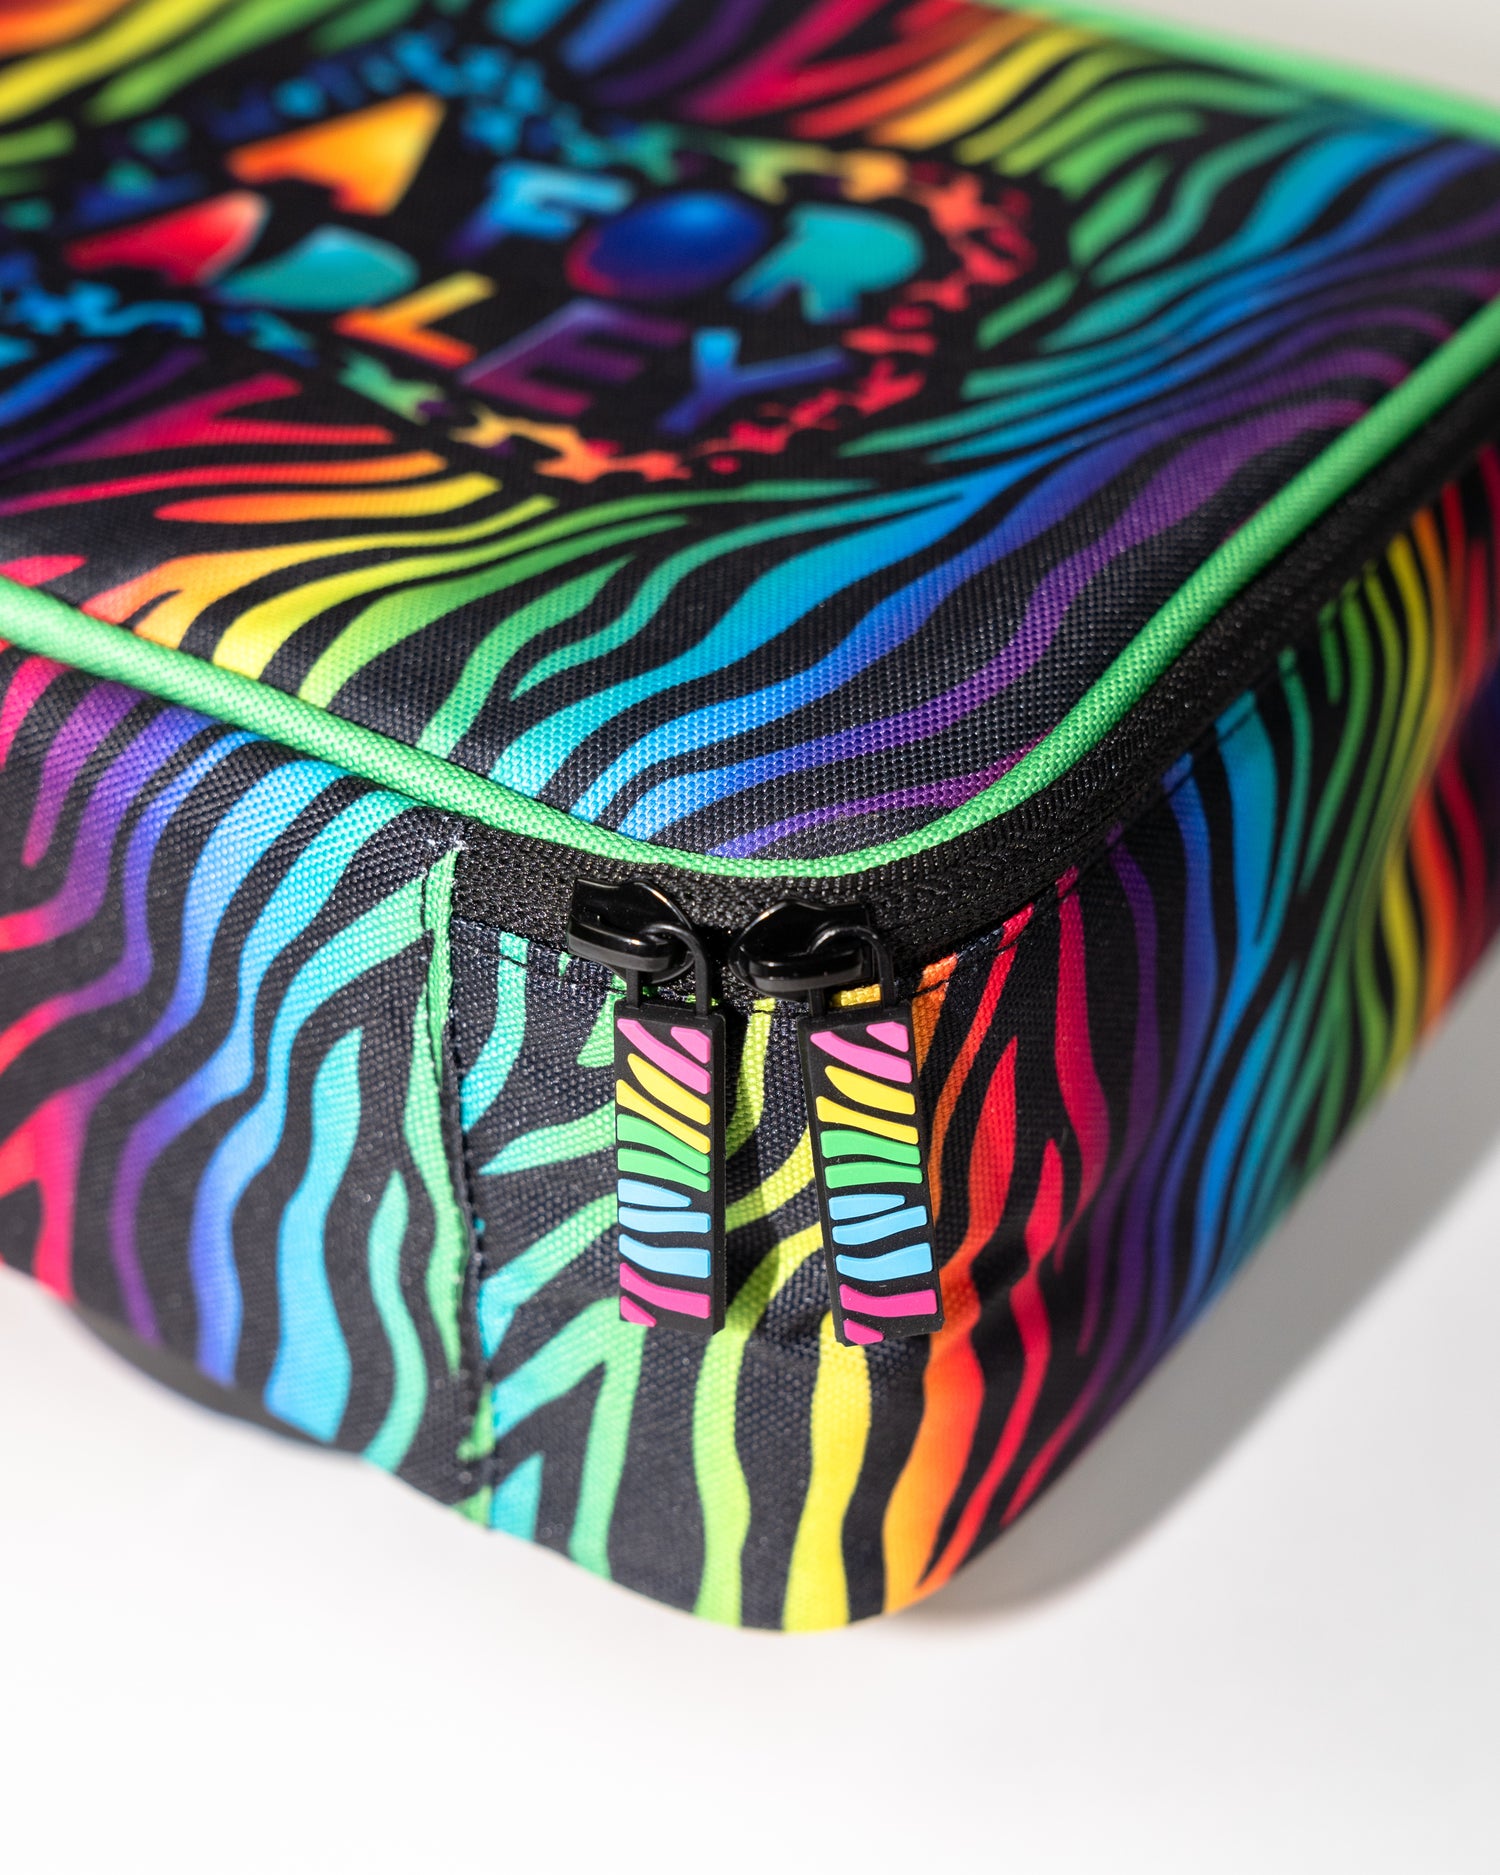 Adley's Neon Rainbow Lunchbox